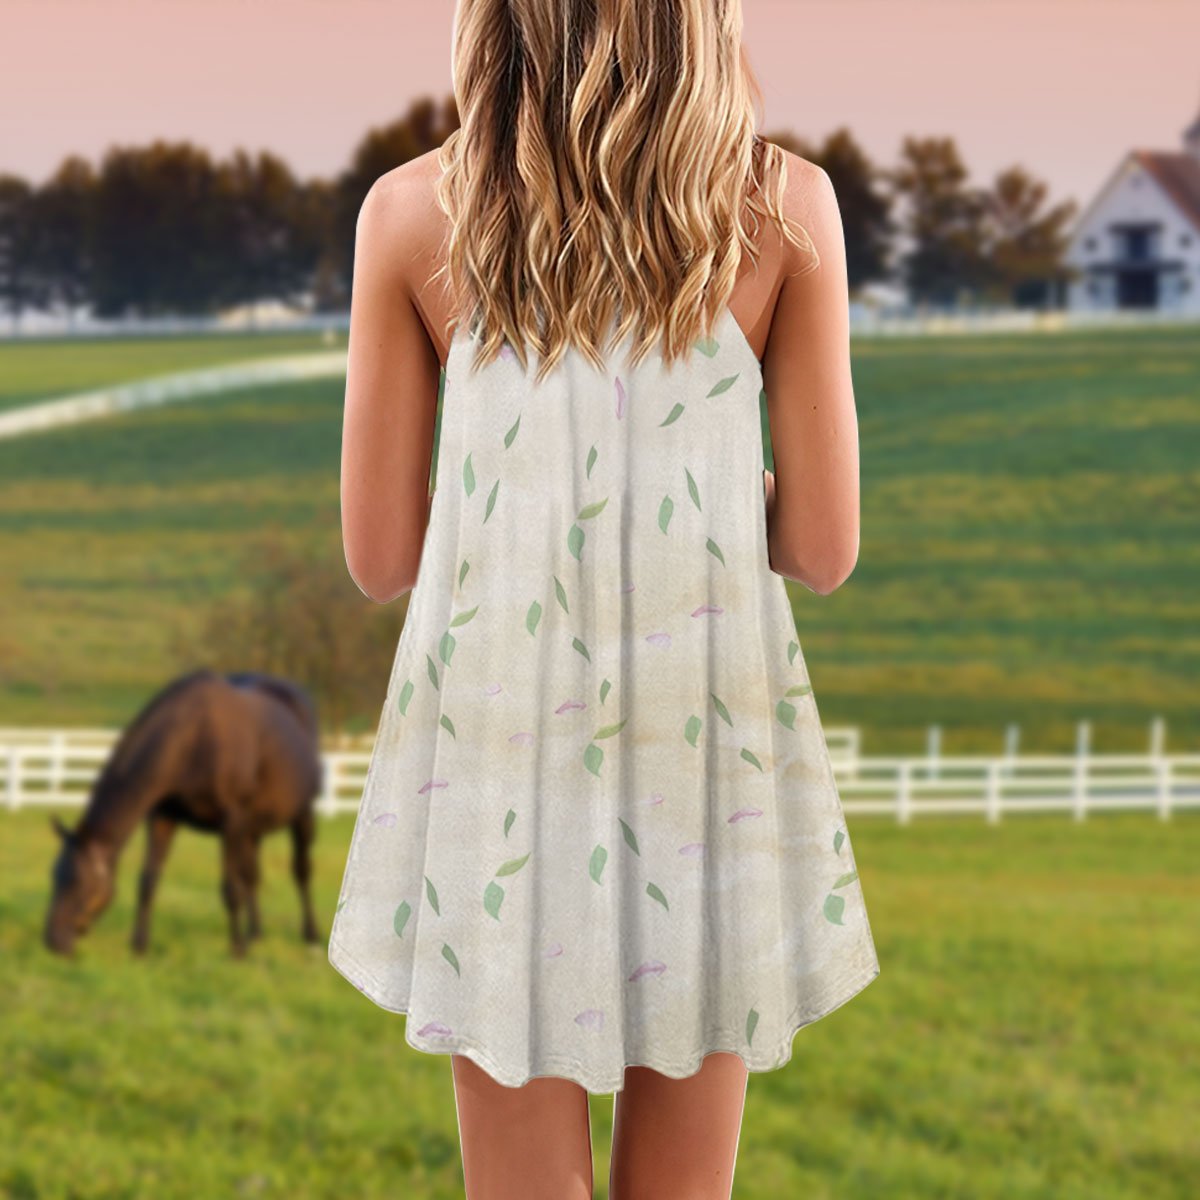 Horse Hoof Prints On My Heart - Summer Dress - Owls Matrix LTD